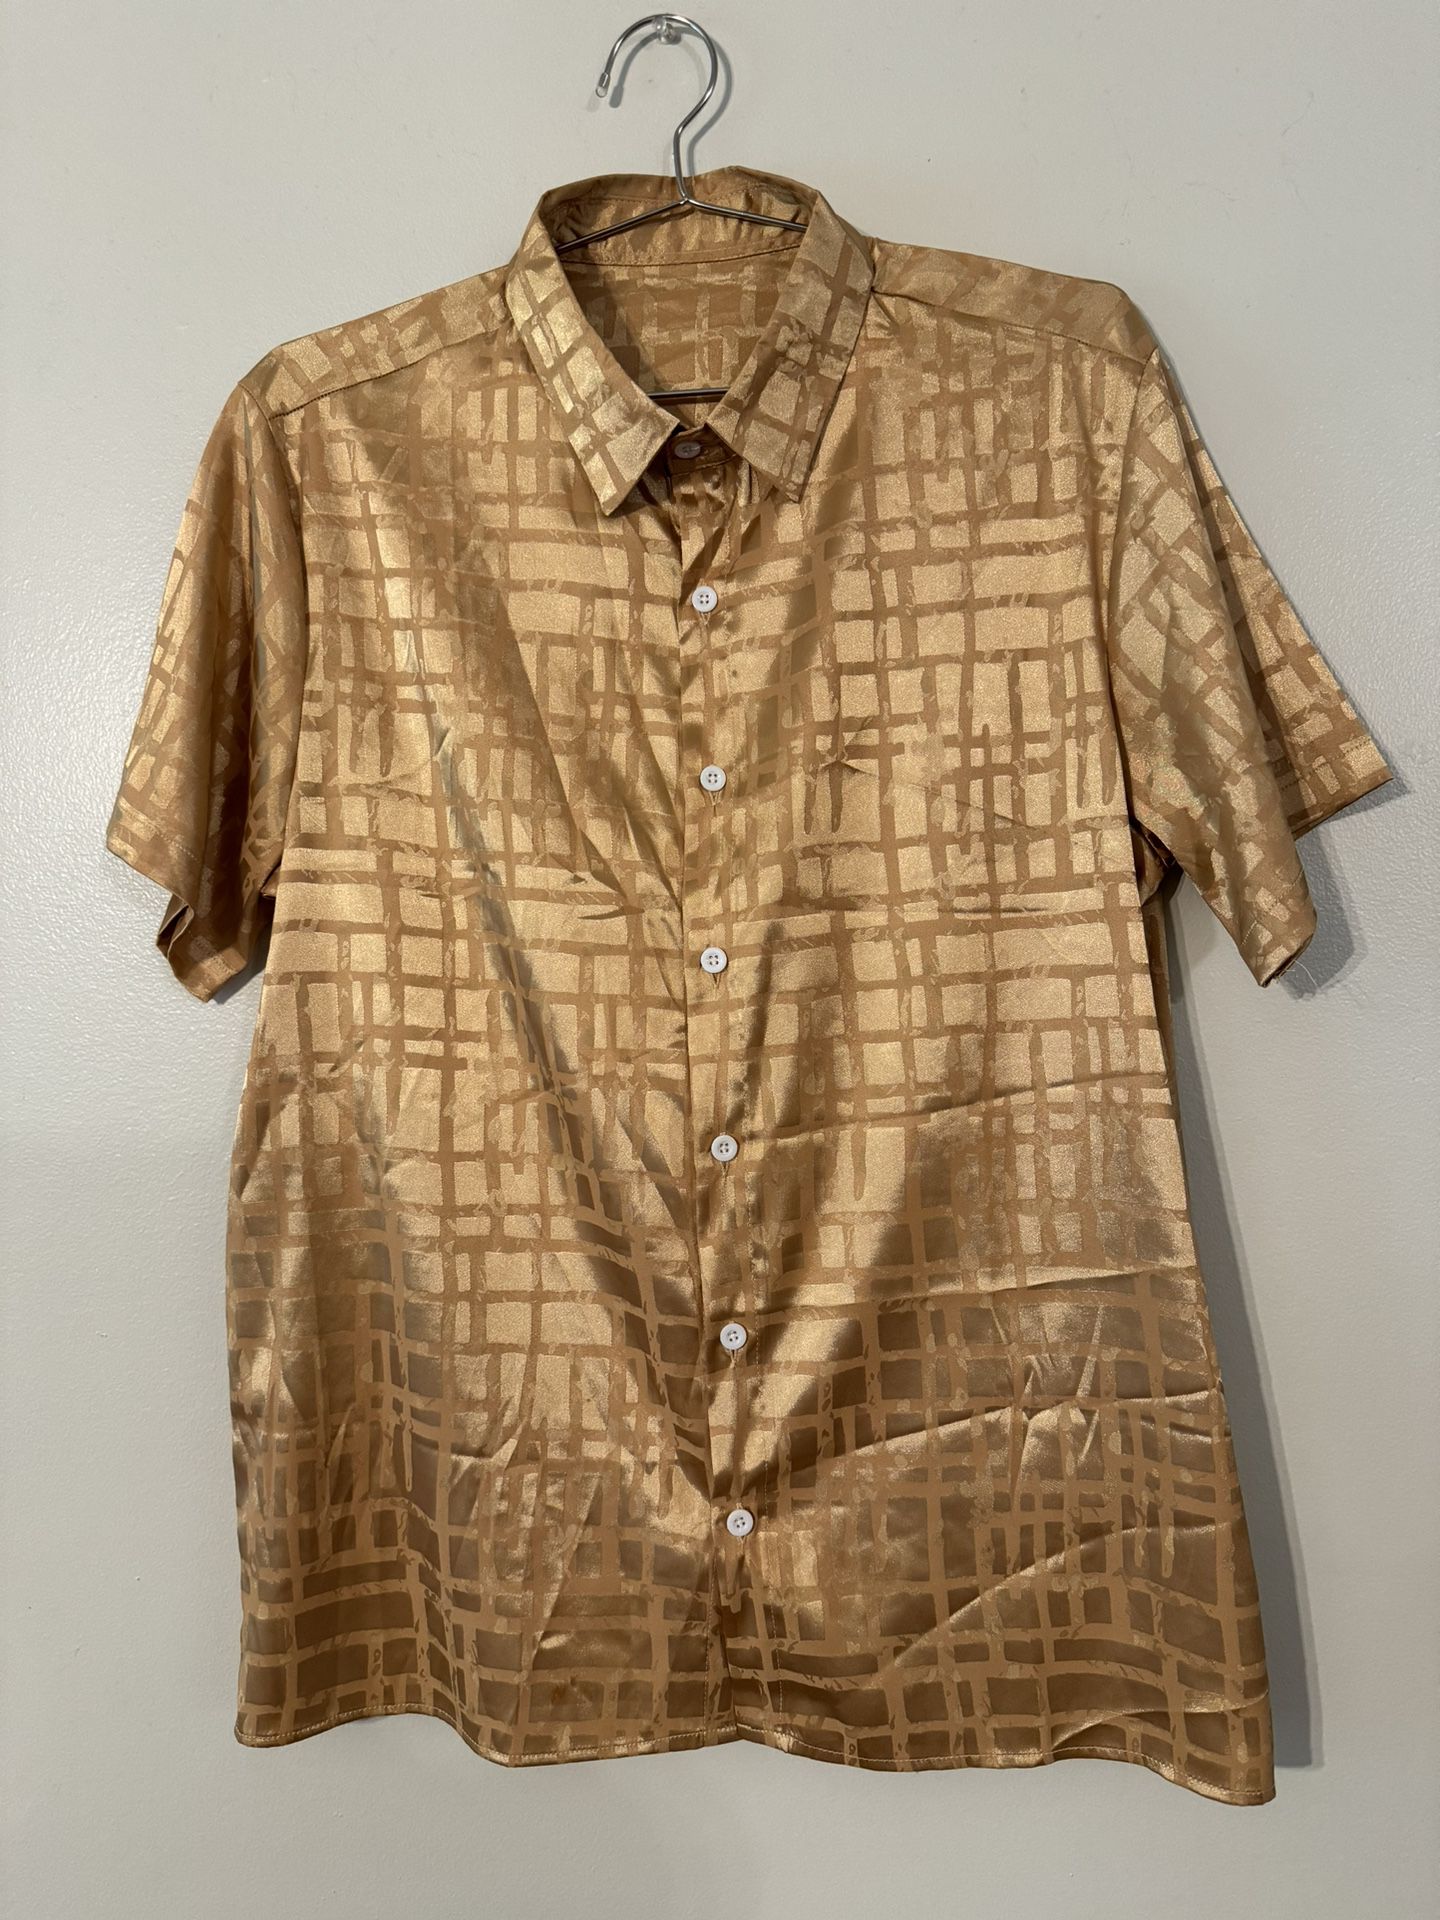 Dress Shirt Men Solid Button Front Shirt (Color : Champagne, Size : S